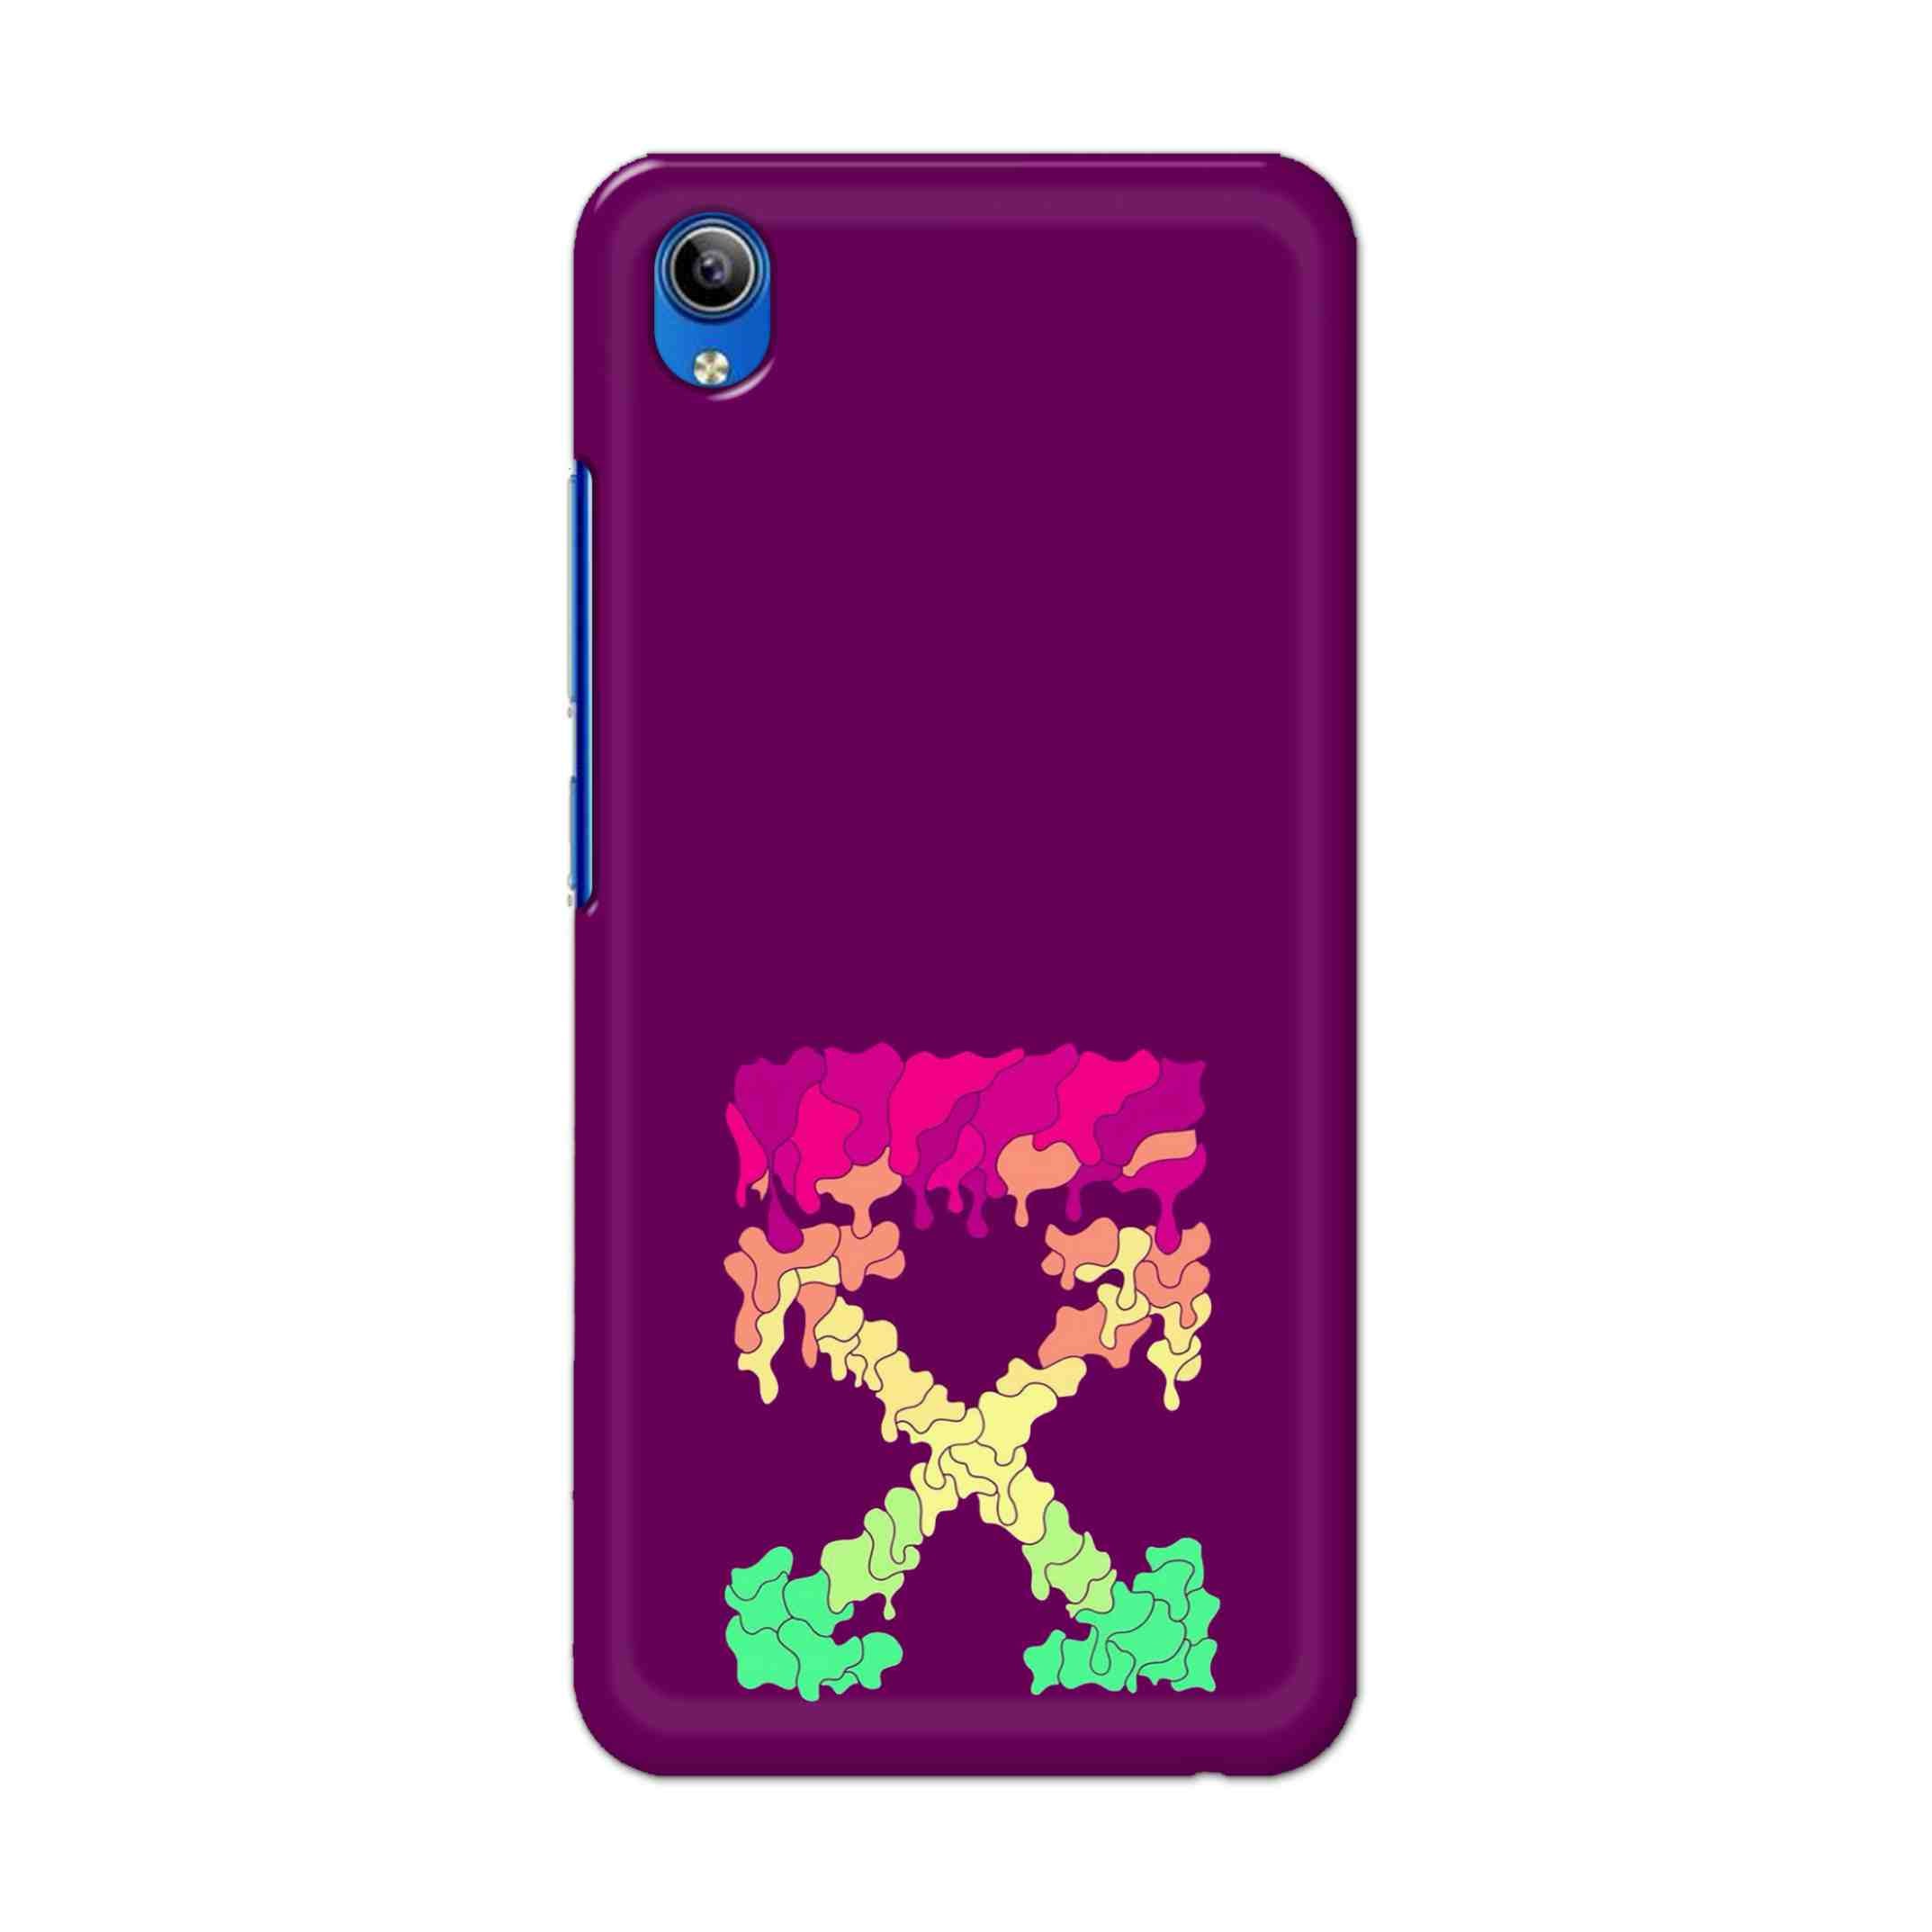 Buy X.O Hard Back Mobile Phone Case Cover For Vivo Y91i Online